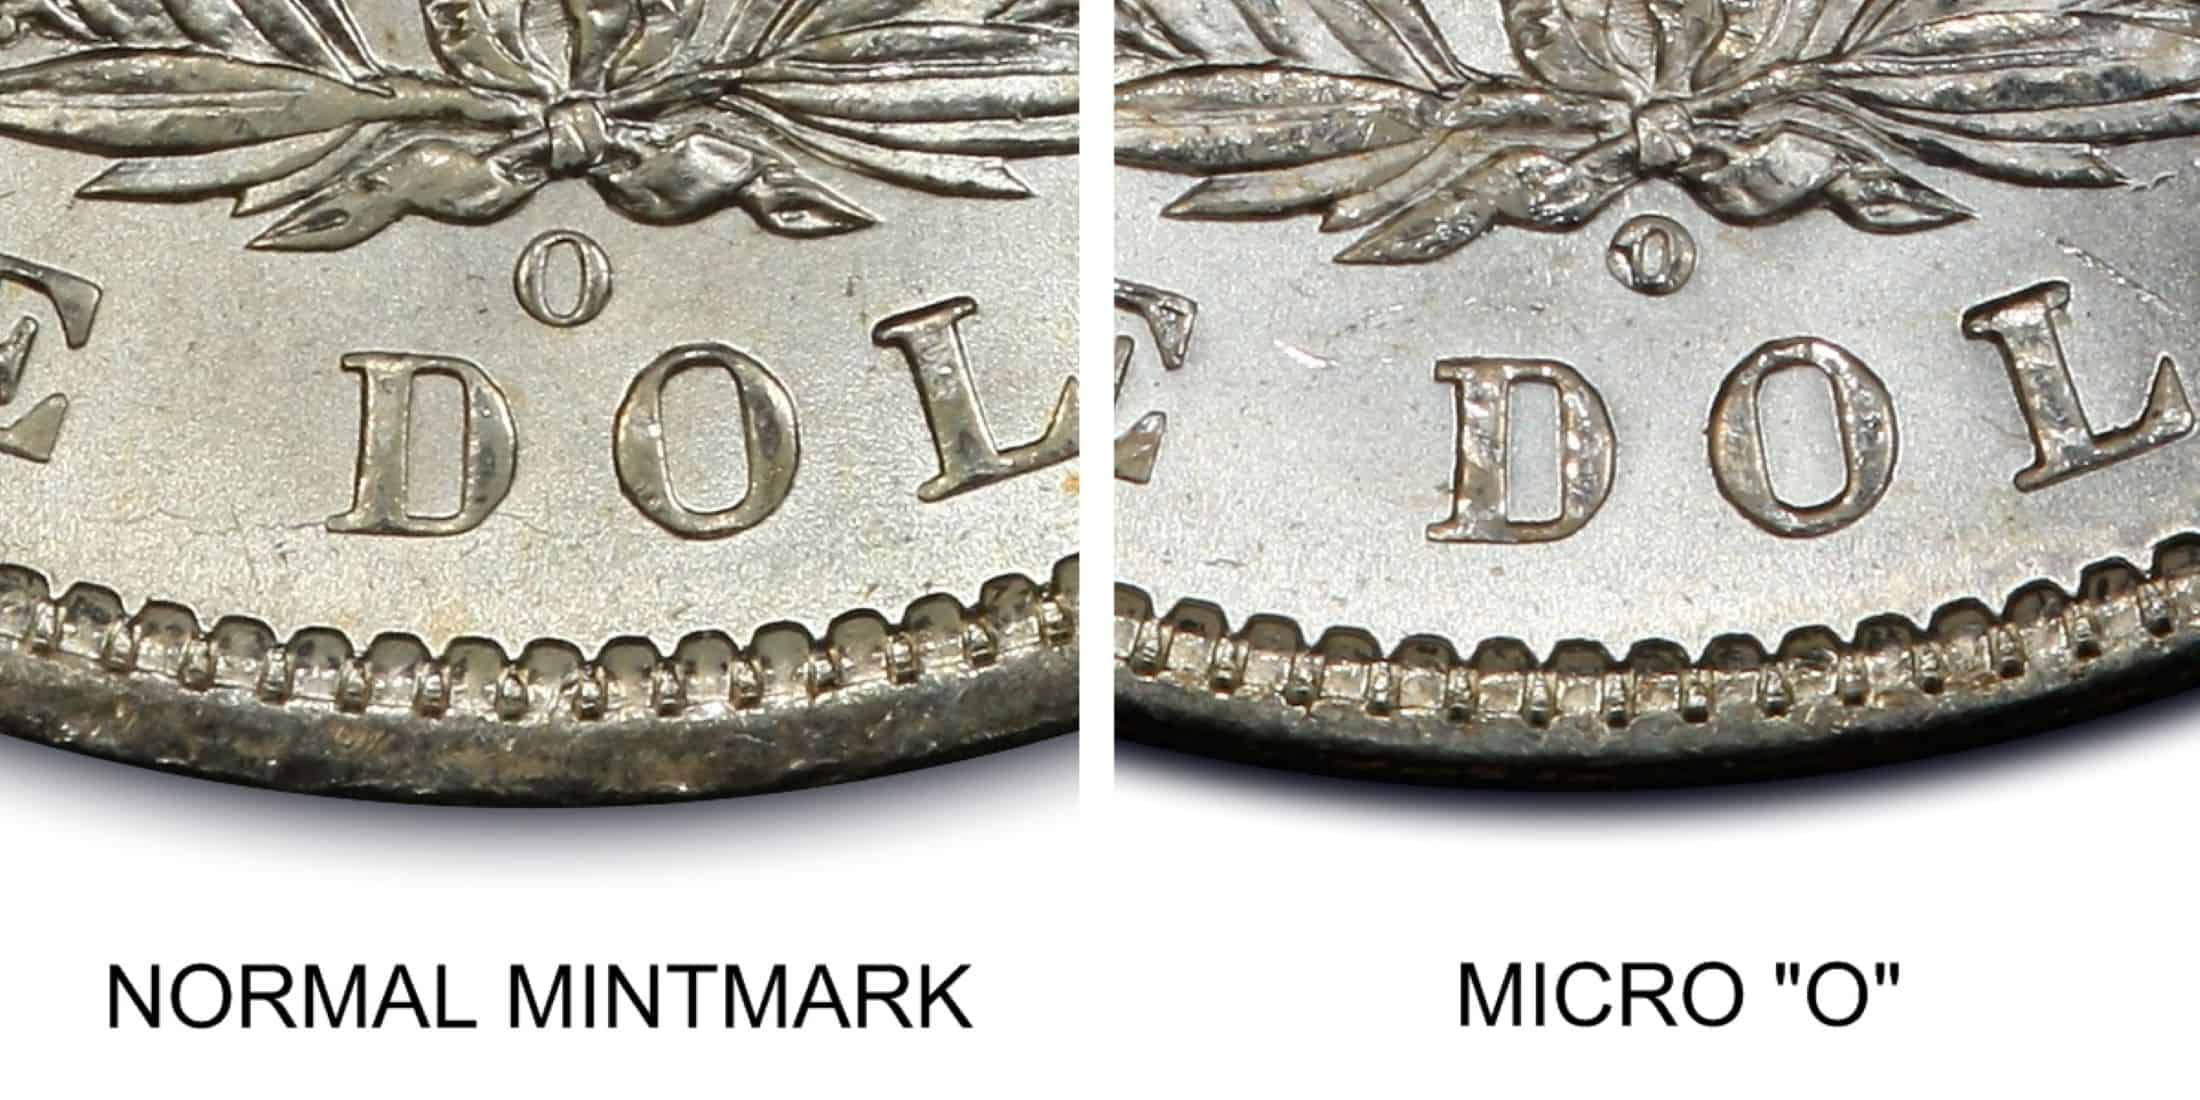 1899 Silver Dollar with Micro-O Mint Mark Error